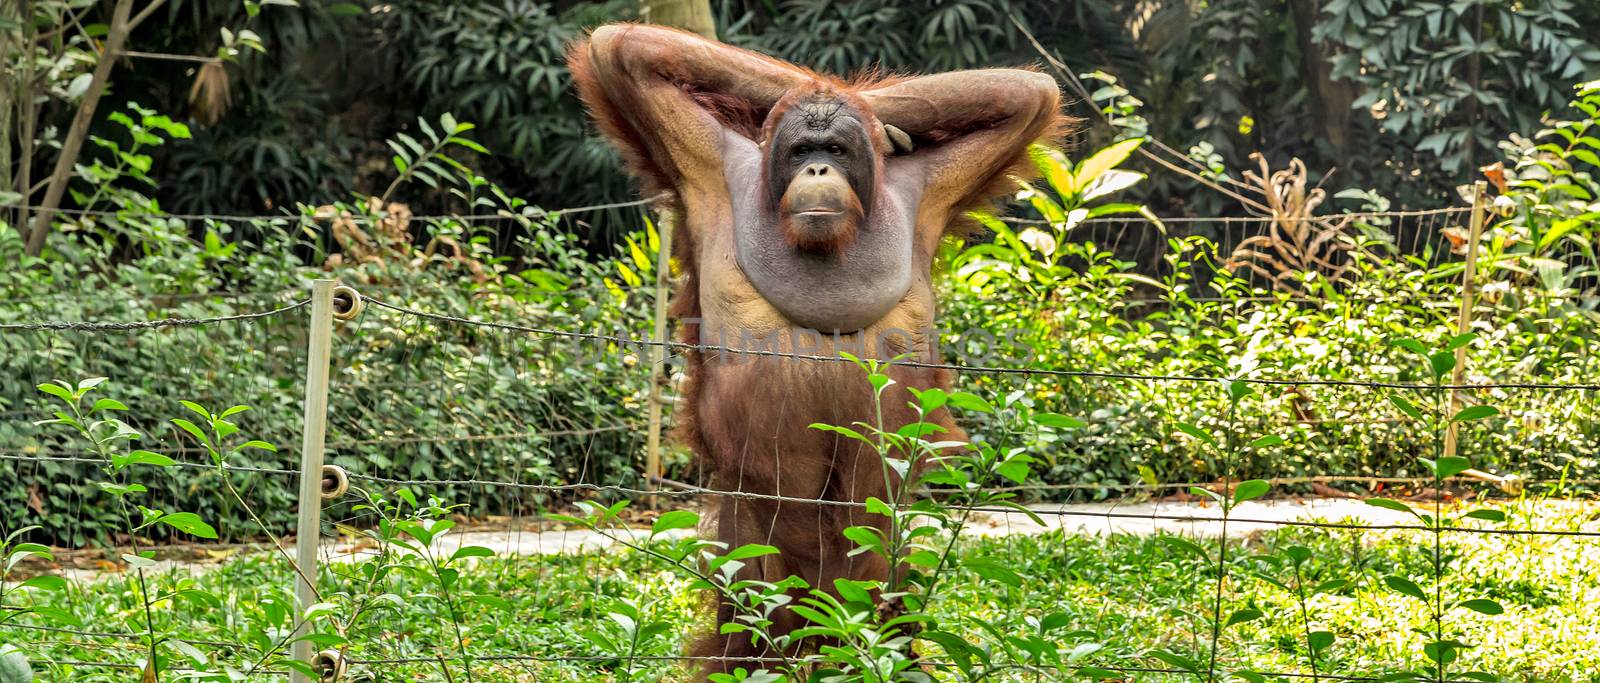 Orangutan male portrait by Vladyslav